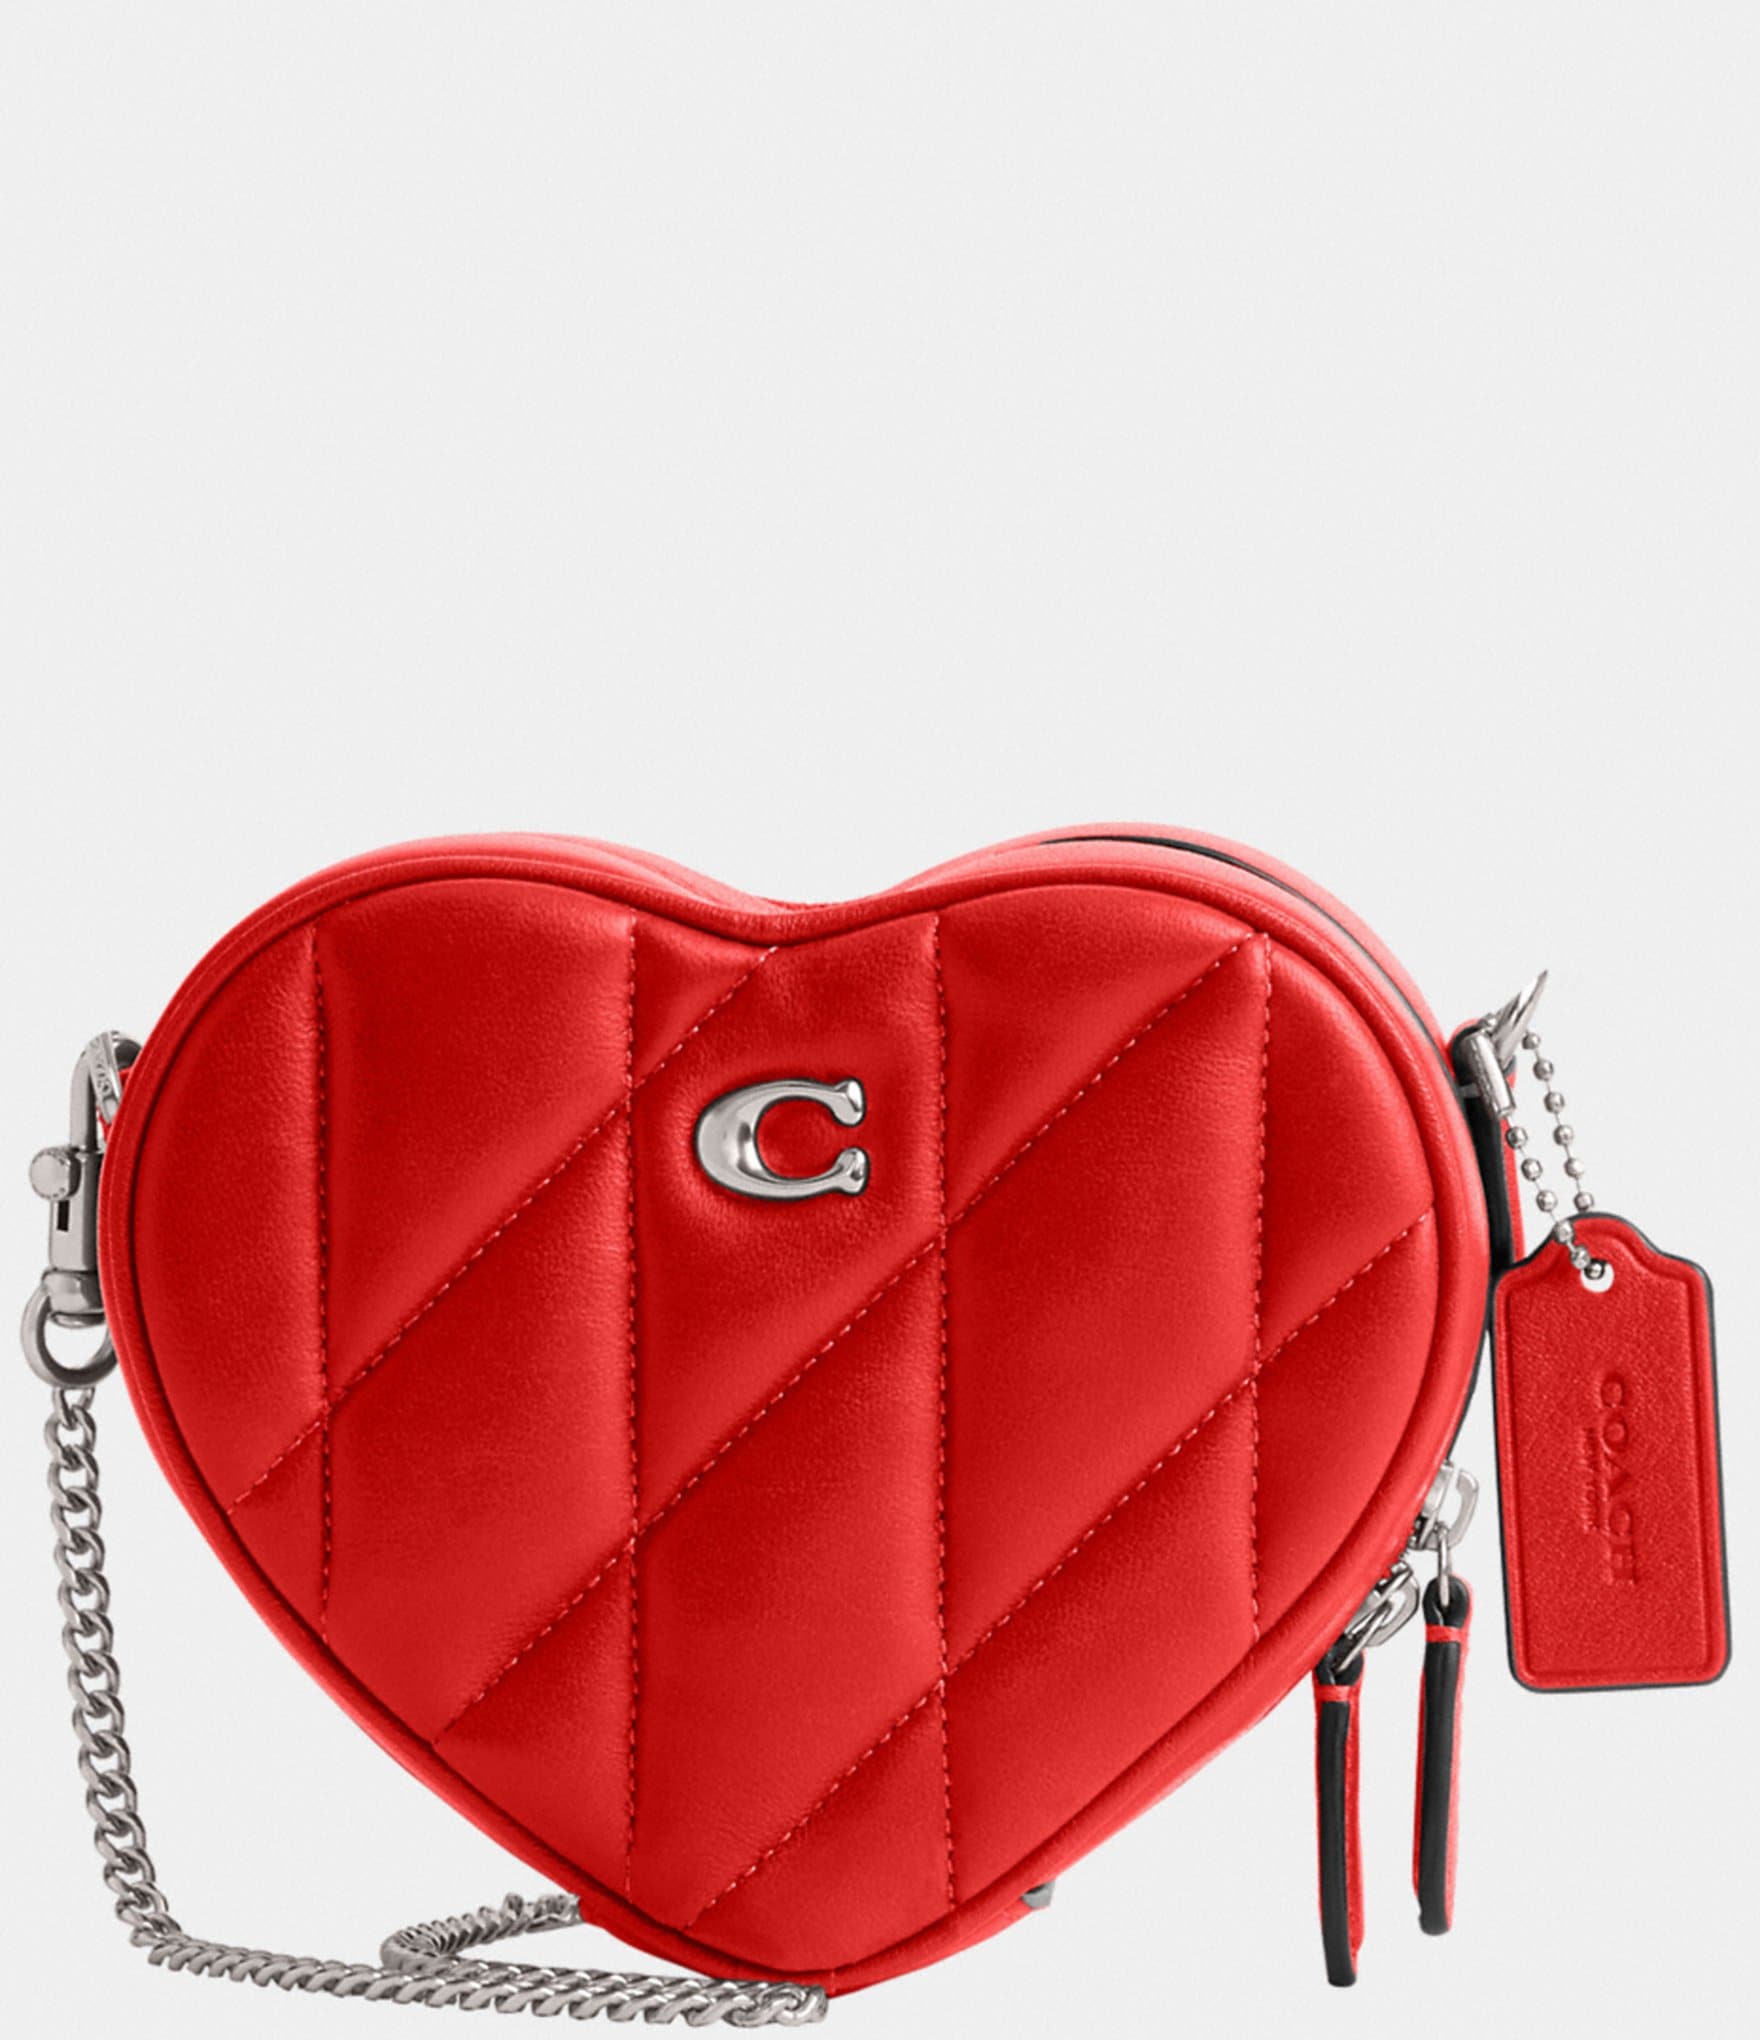 Buy Red Handbags for Women by Coach Online | Ajio.com